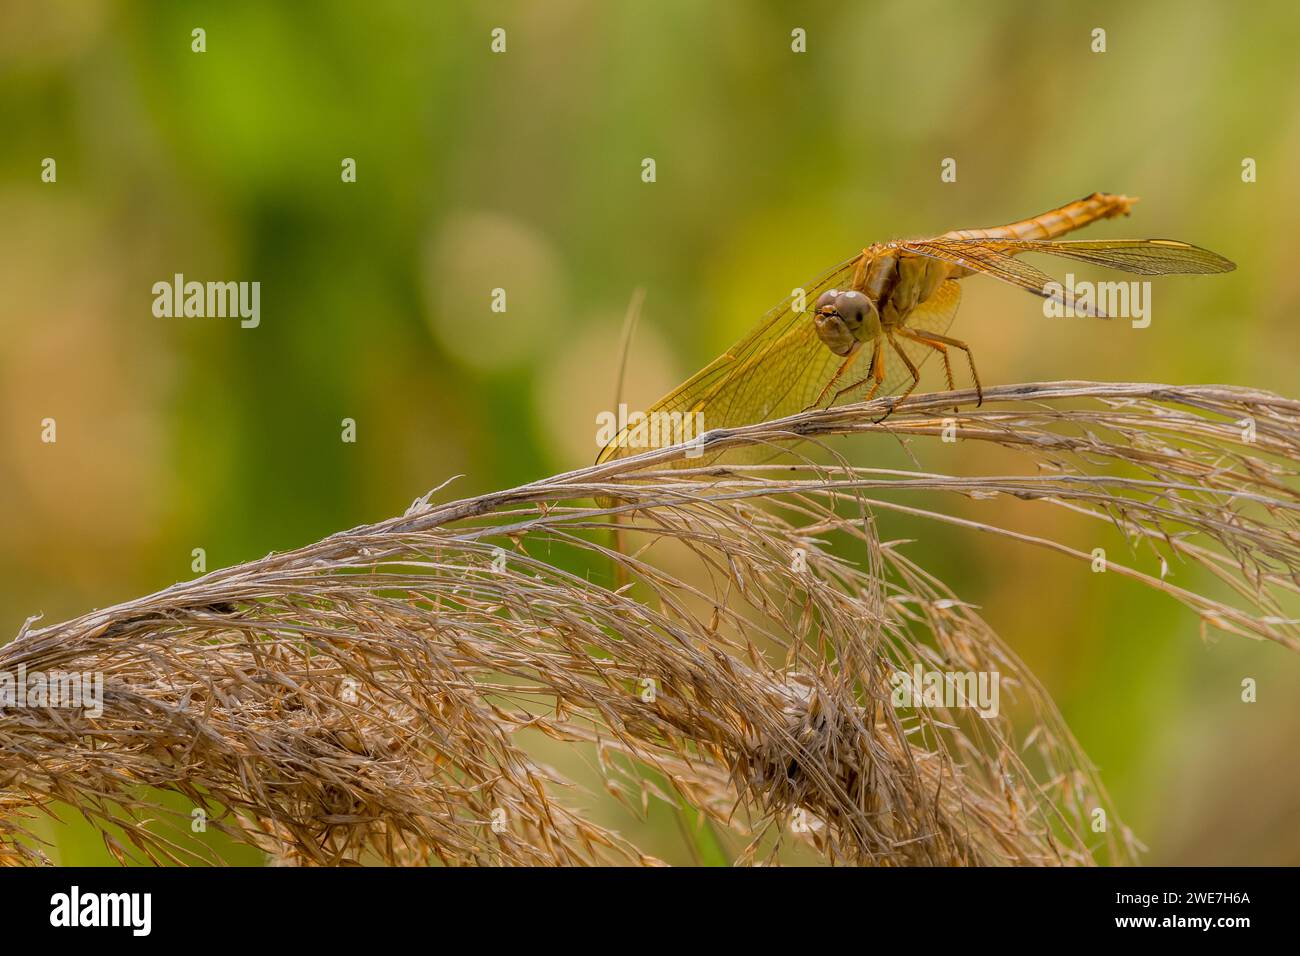 Primer plano extremo de libélula de color dorado posada en un tallo de trigo de invierno con fondo borroso Foto de stock